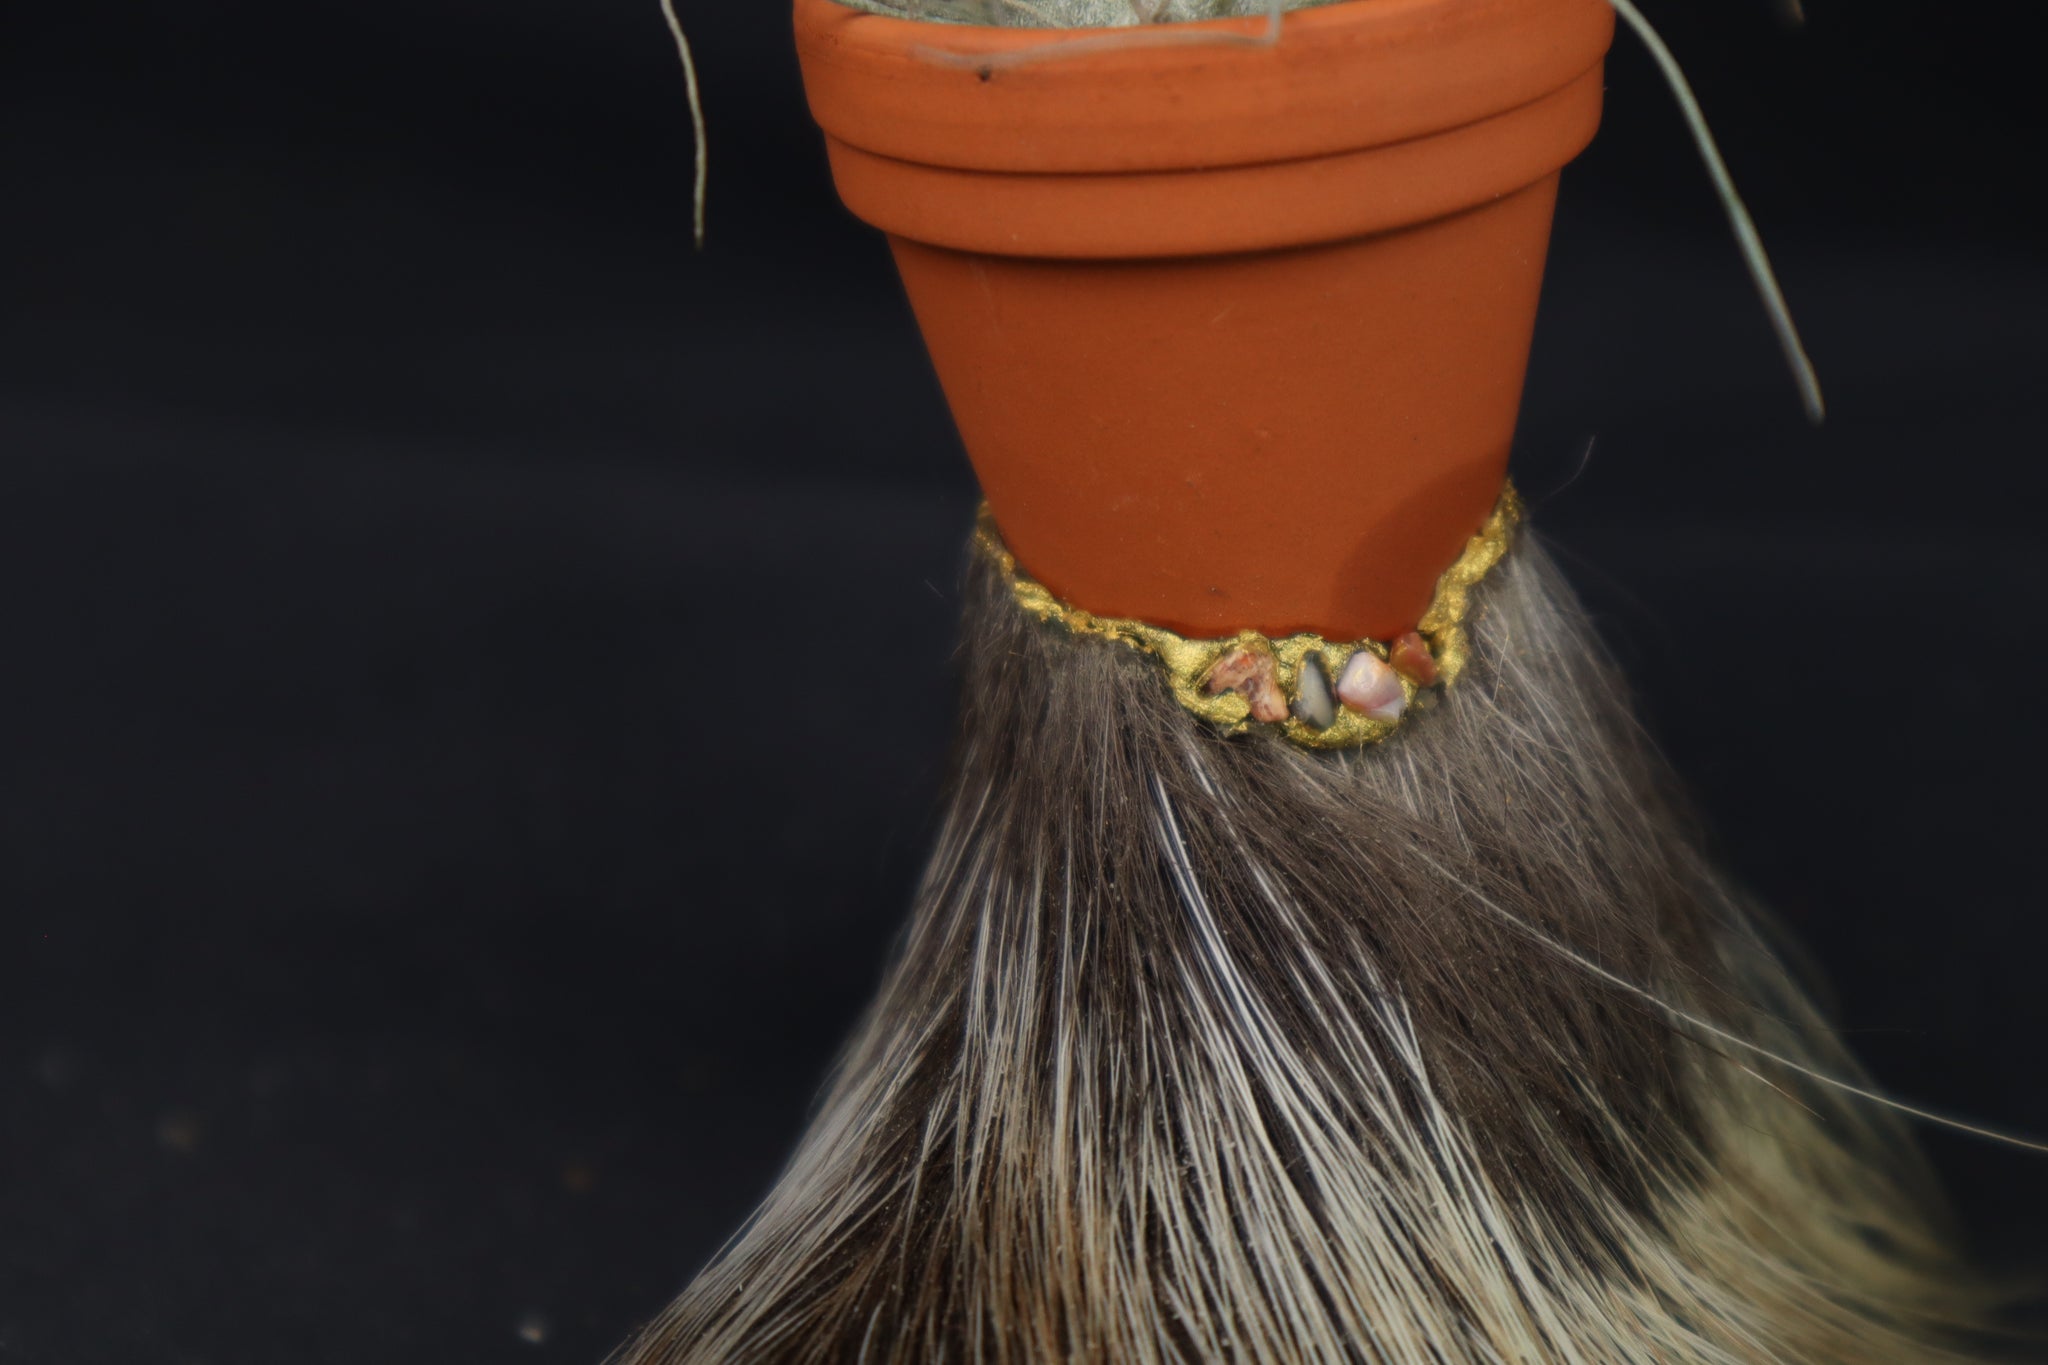 Porcupine Foot Planter with Fuchsii v gracilis